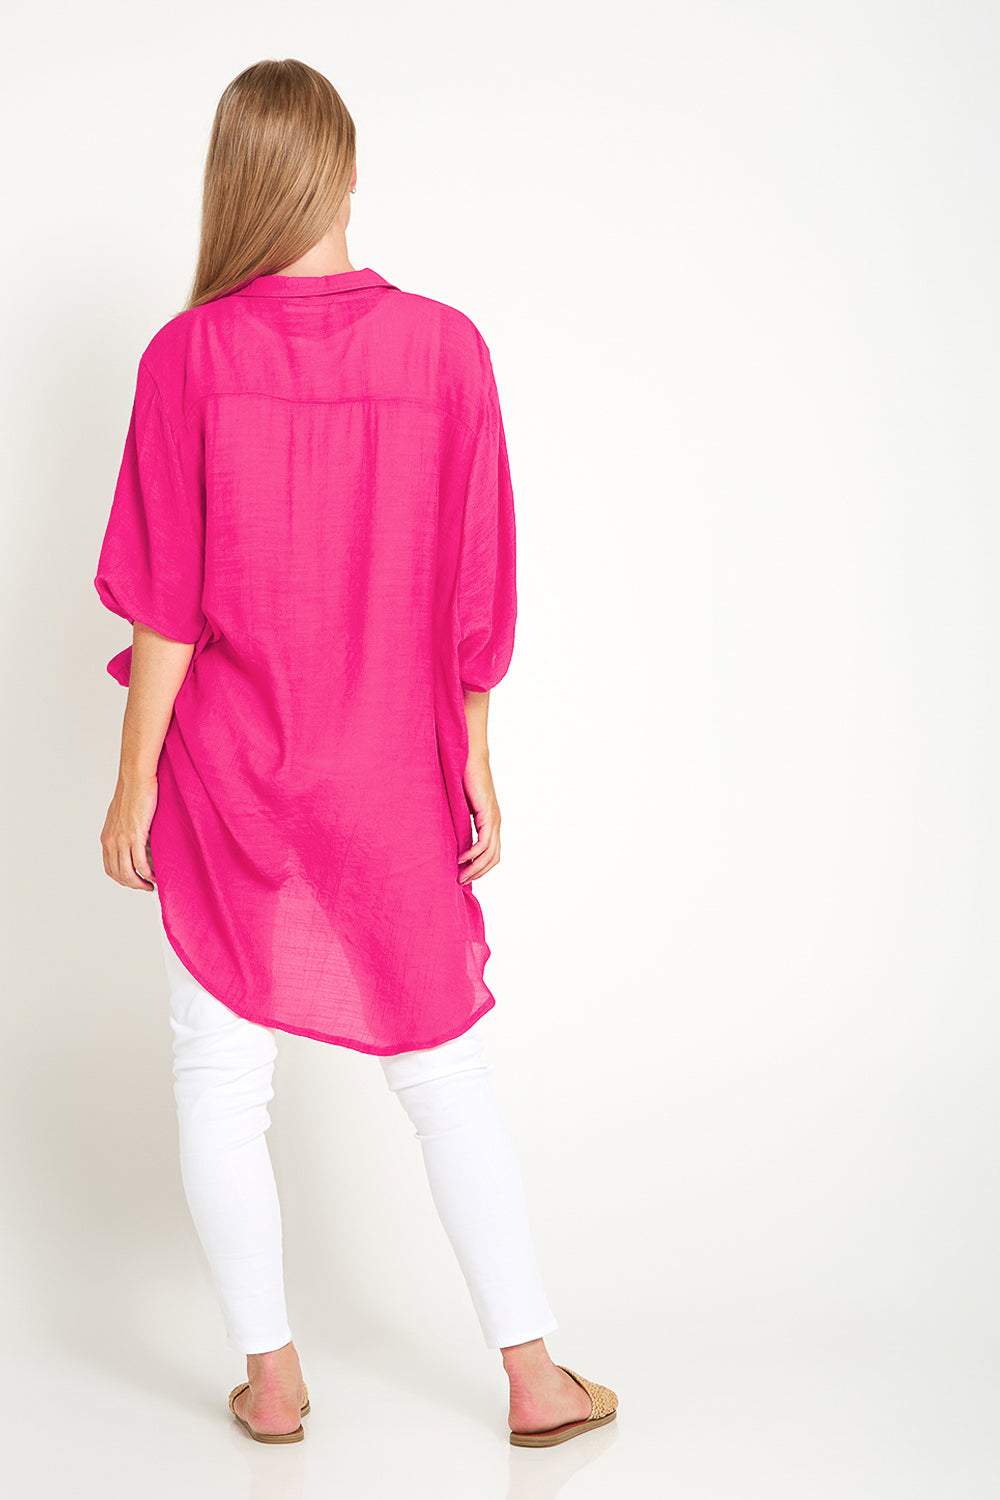 Comfort Shirt - Hot Pink  Cotton Village for Summer – TULIO Fashion